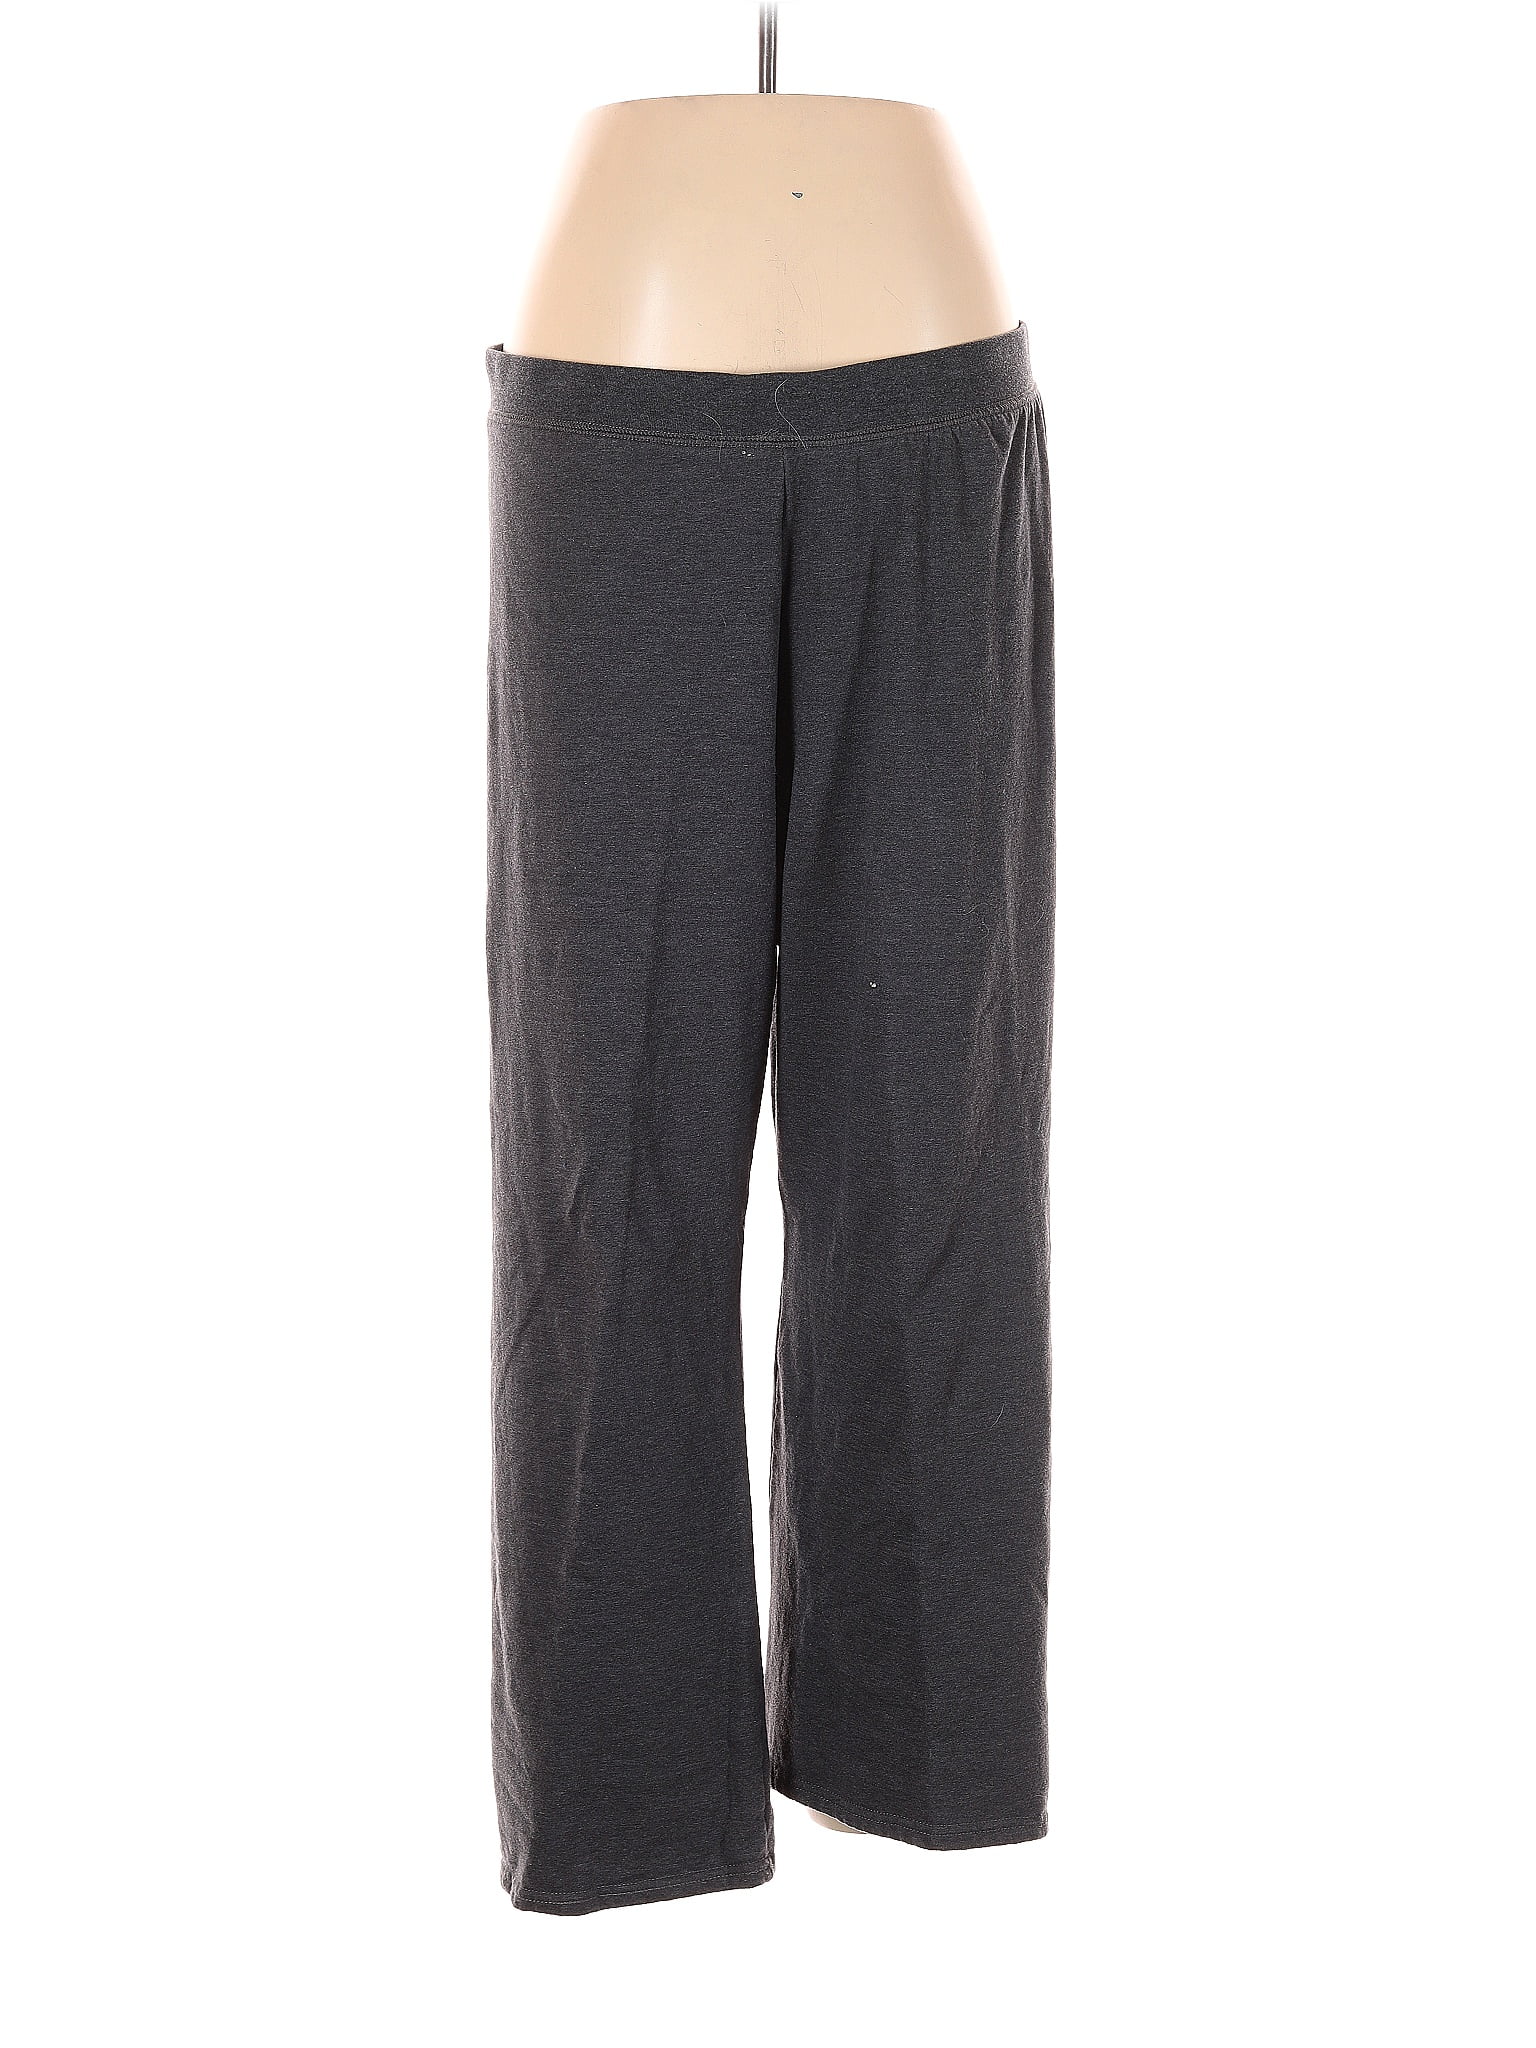 Hanes Marled Gray Sweatpants Size L - 47% off | ThredUp